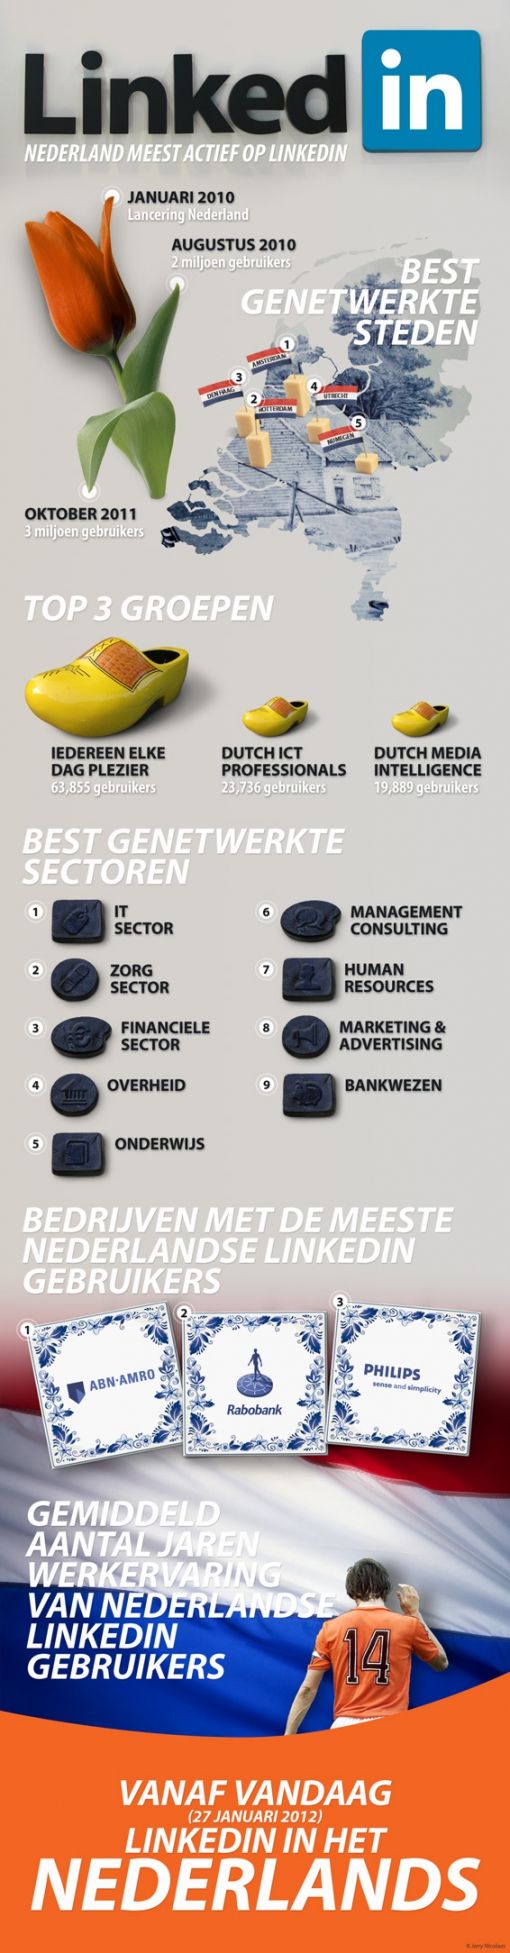 infographic-nl-li.jpg